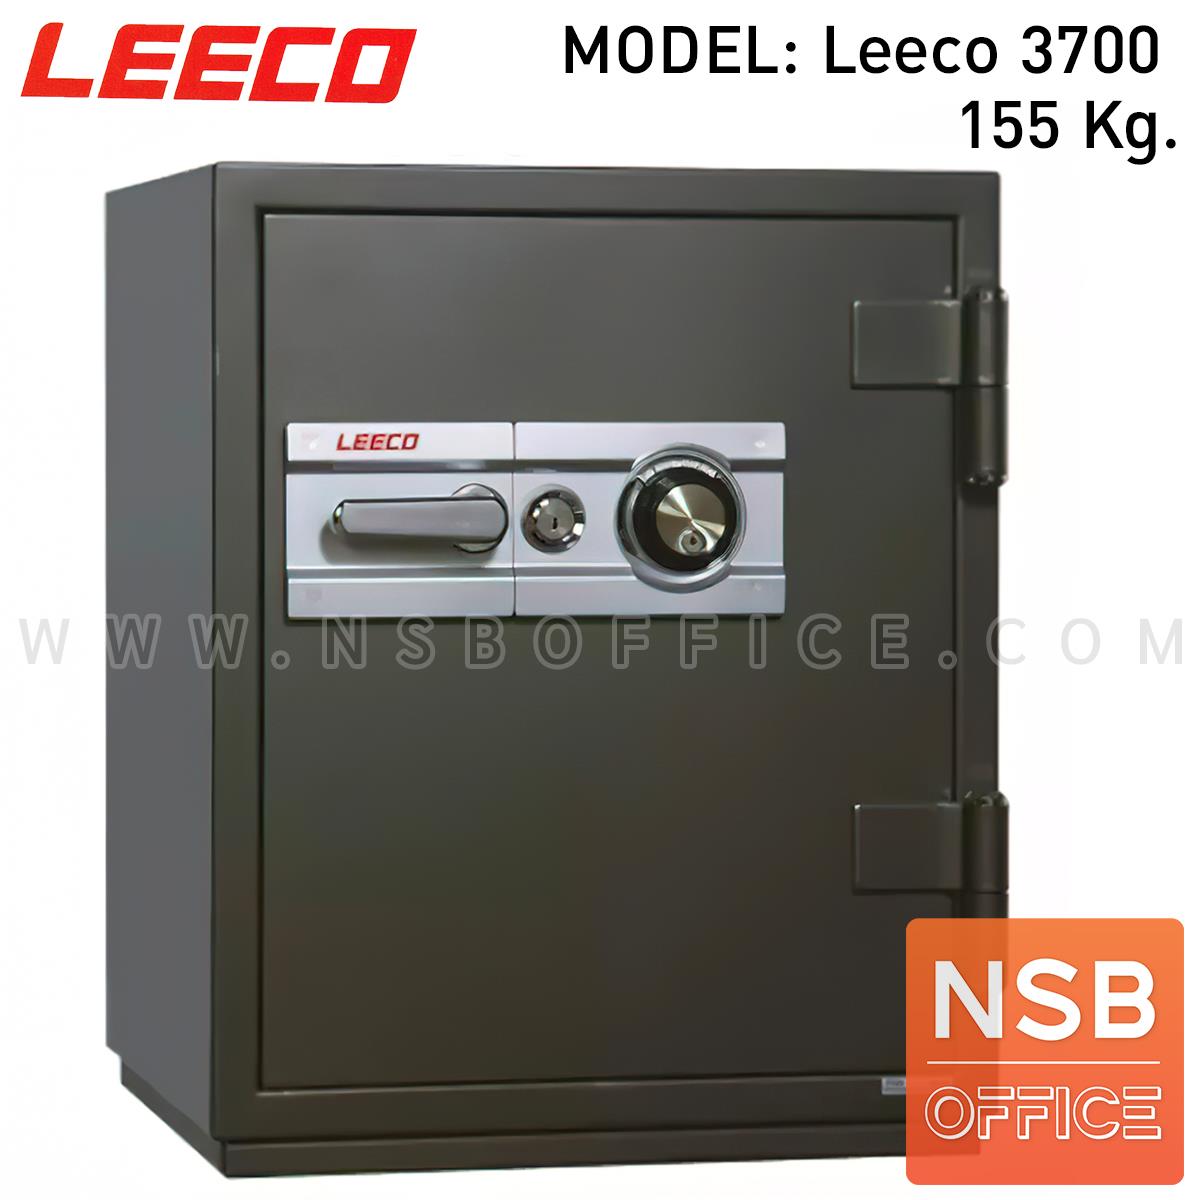 F02A057:ตู้เซฟนิรภัย 155 กก. ลีโก้ รุ่น Leeco 3700 (1 กุญแจ 1 รหัส)   